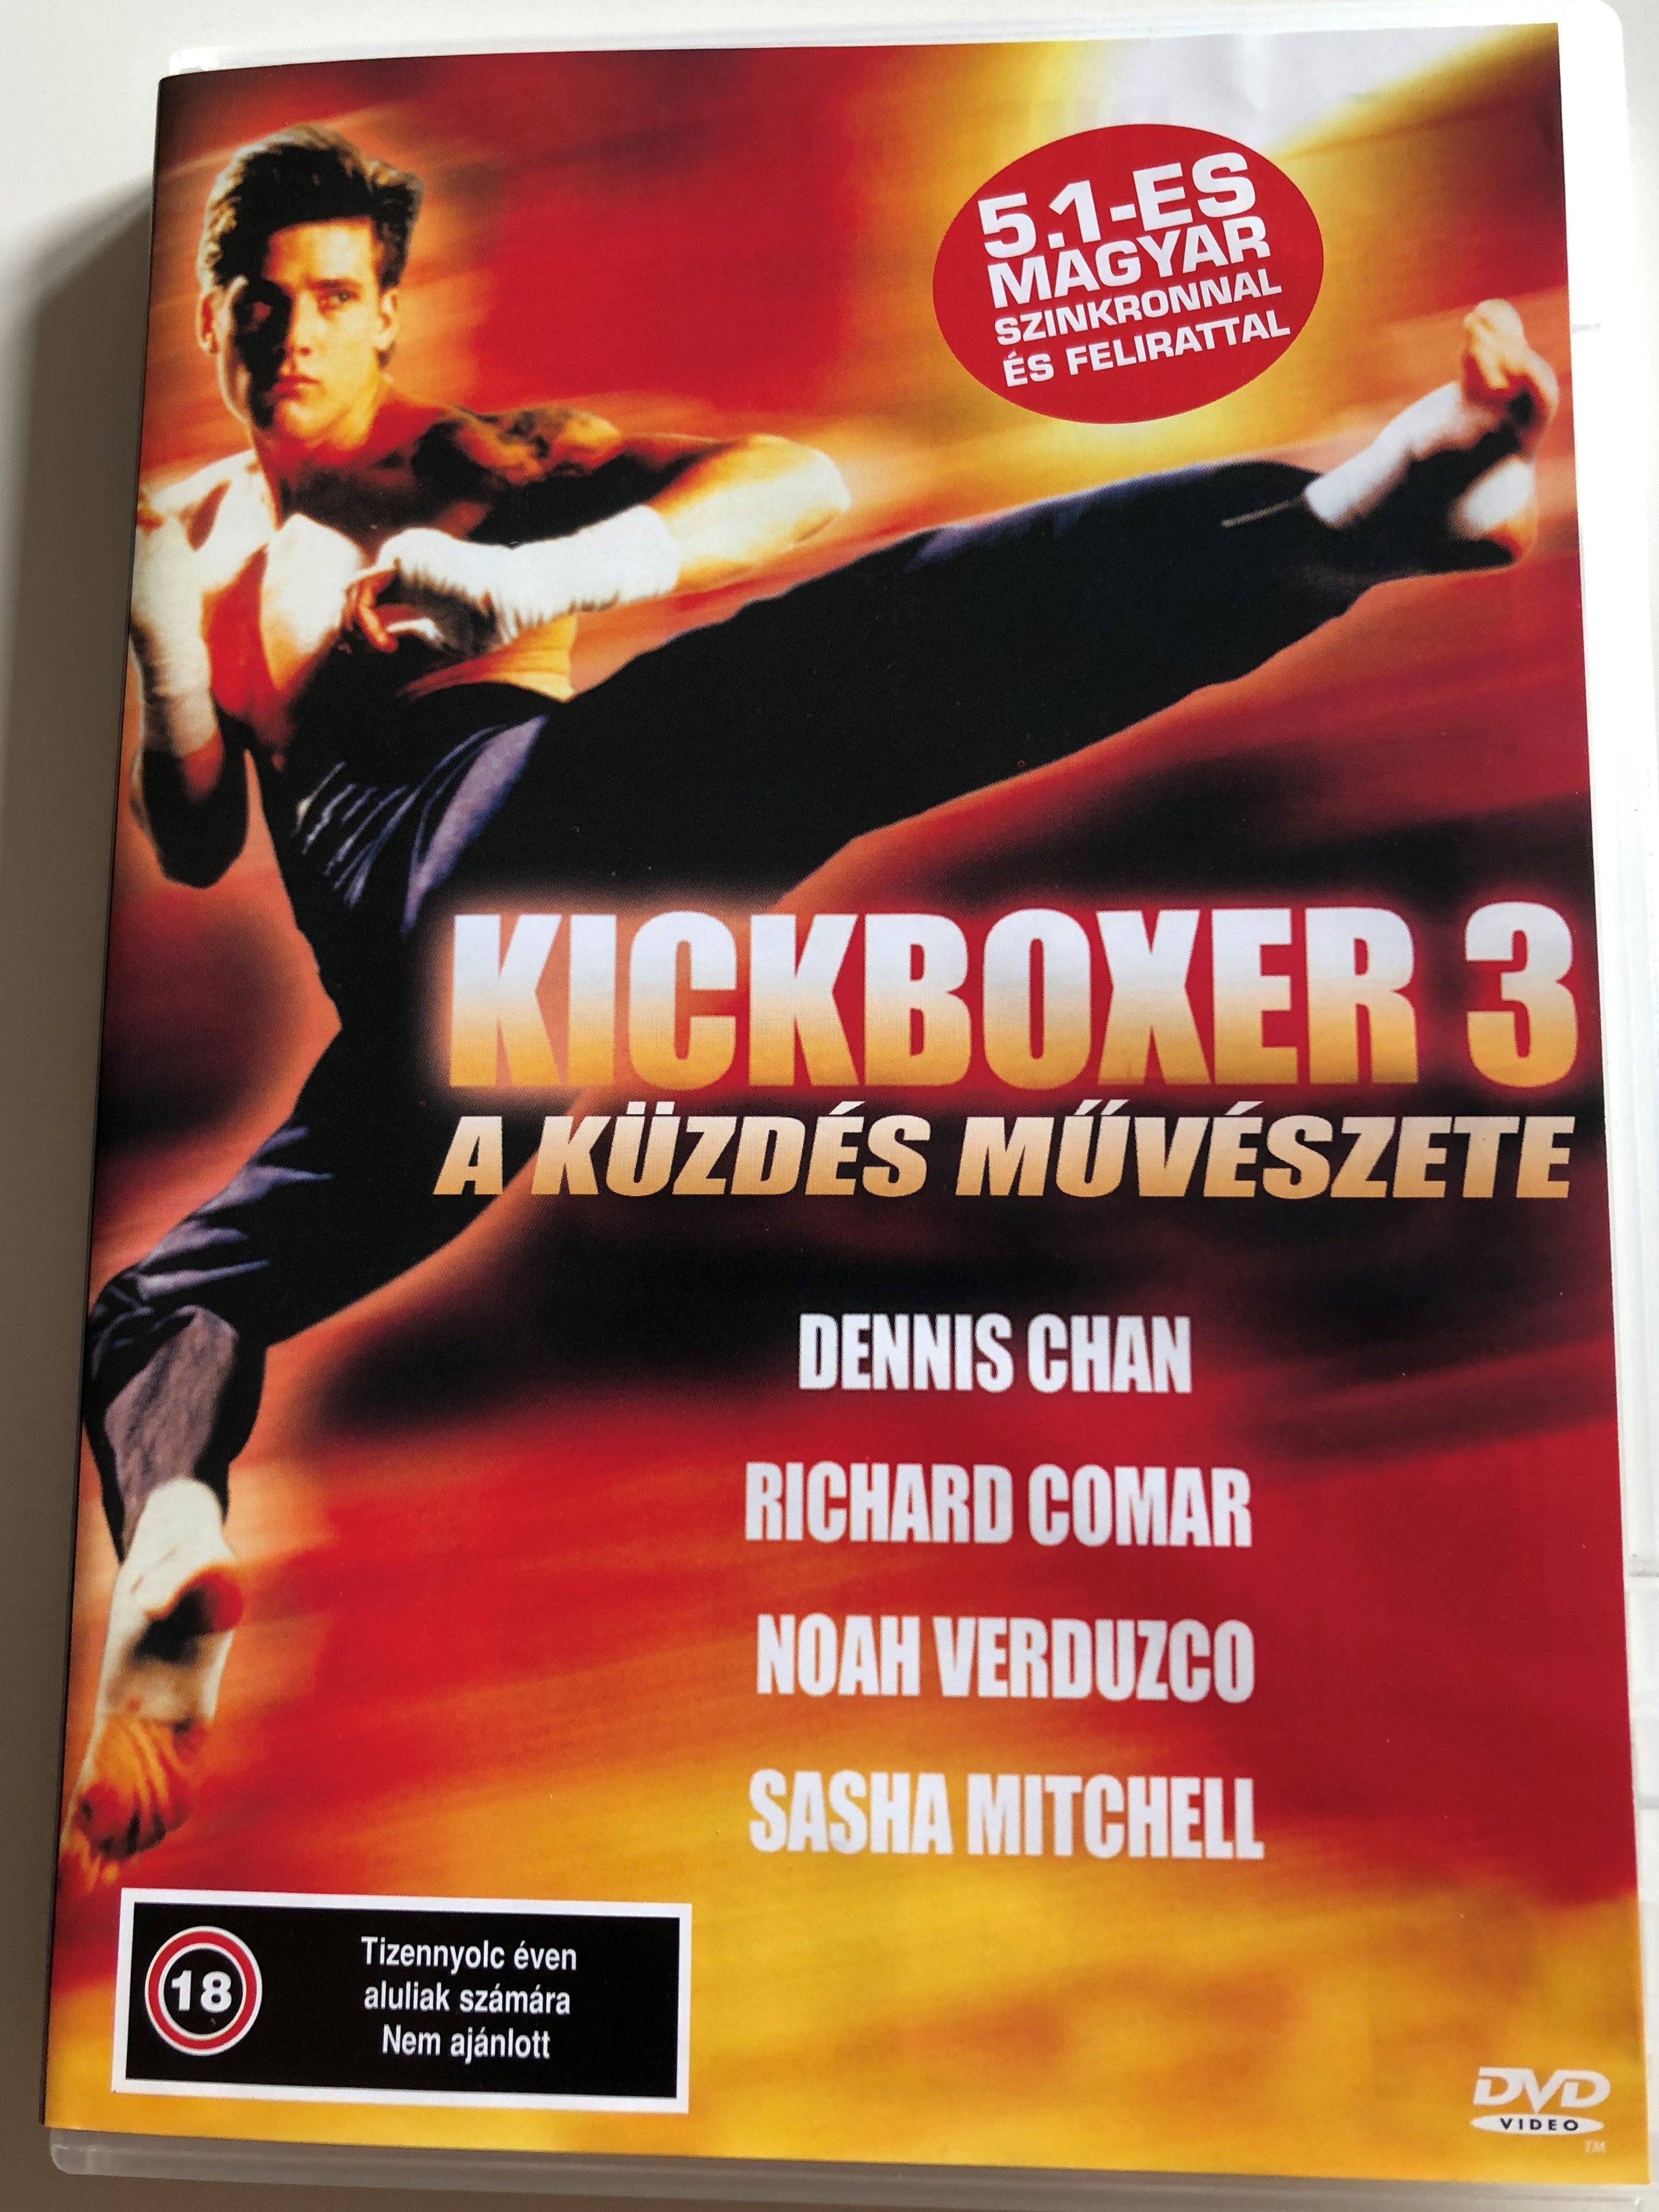 kickboxer-3-the-art-of-war-dvd-1992-kickboxer-3-a-k-zd-s-m-v-szete-directed-by-rick-king-starring-sasha-mitchell-dennis-chan-richard-comar-noah-verduzco-alethea-miranda-ian-jacklin-1-.jpg